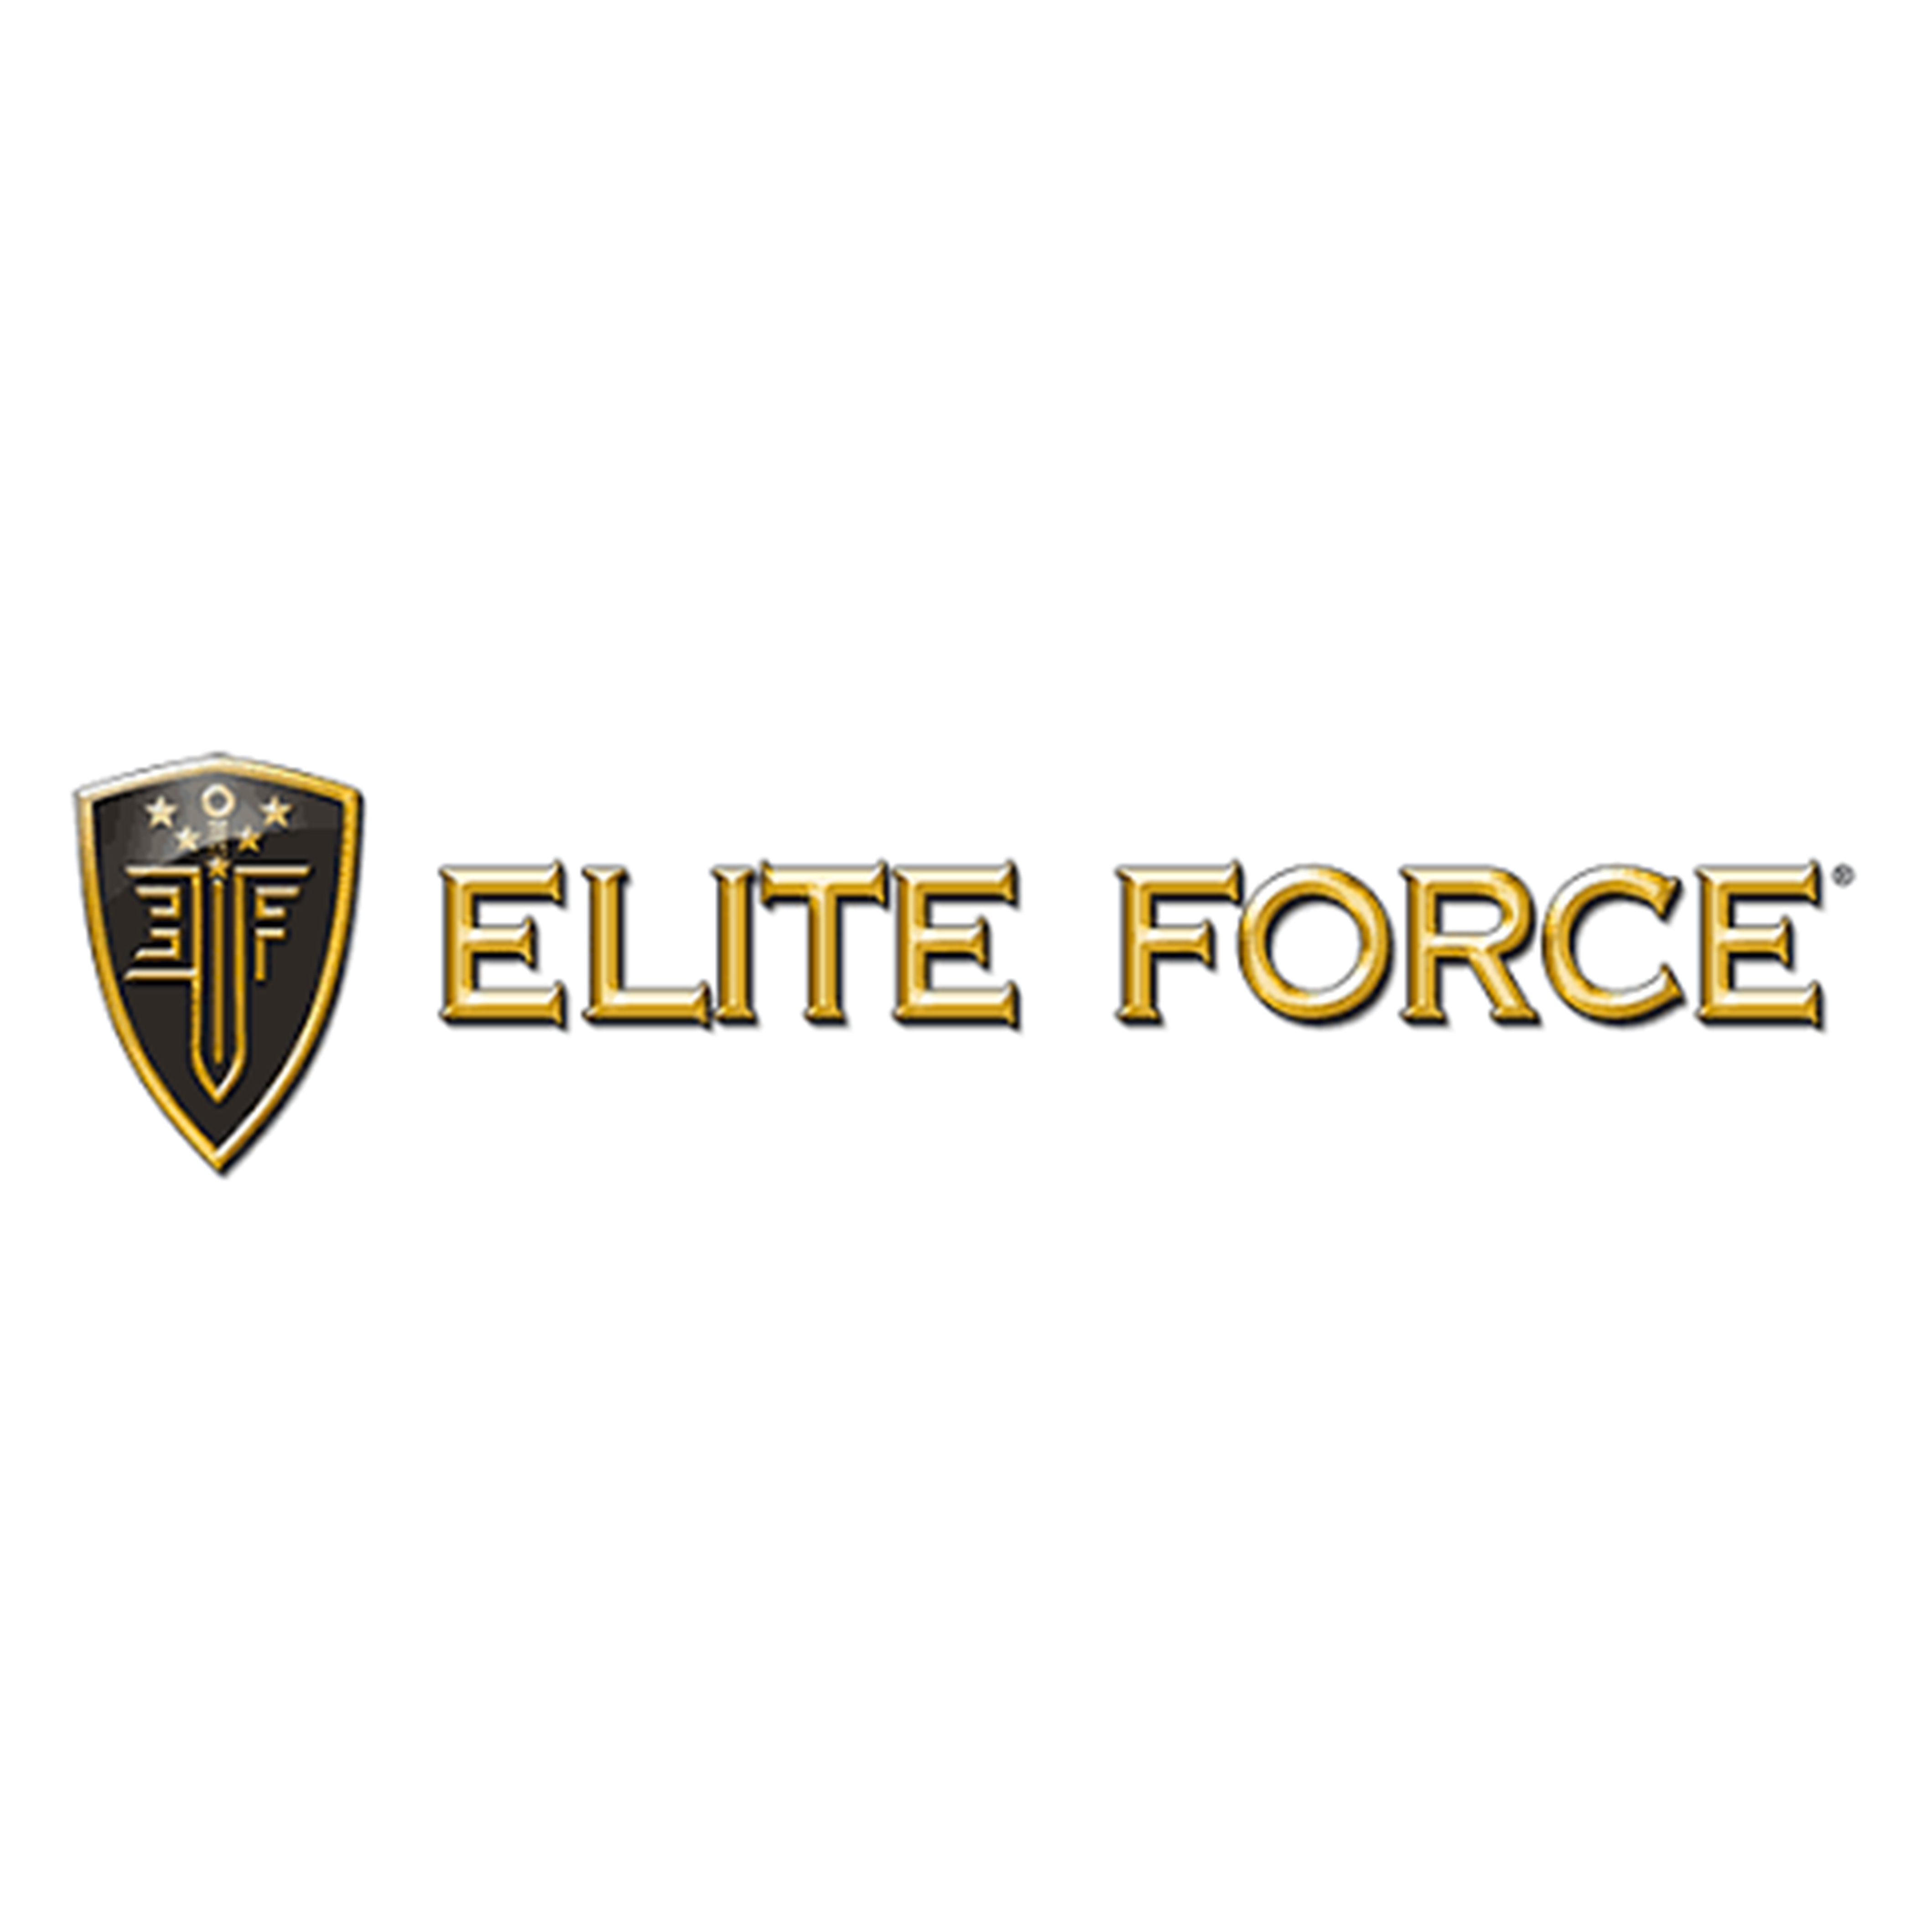 Elite Force Airsoft logo